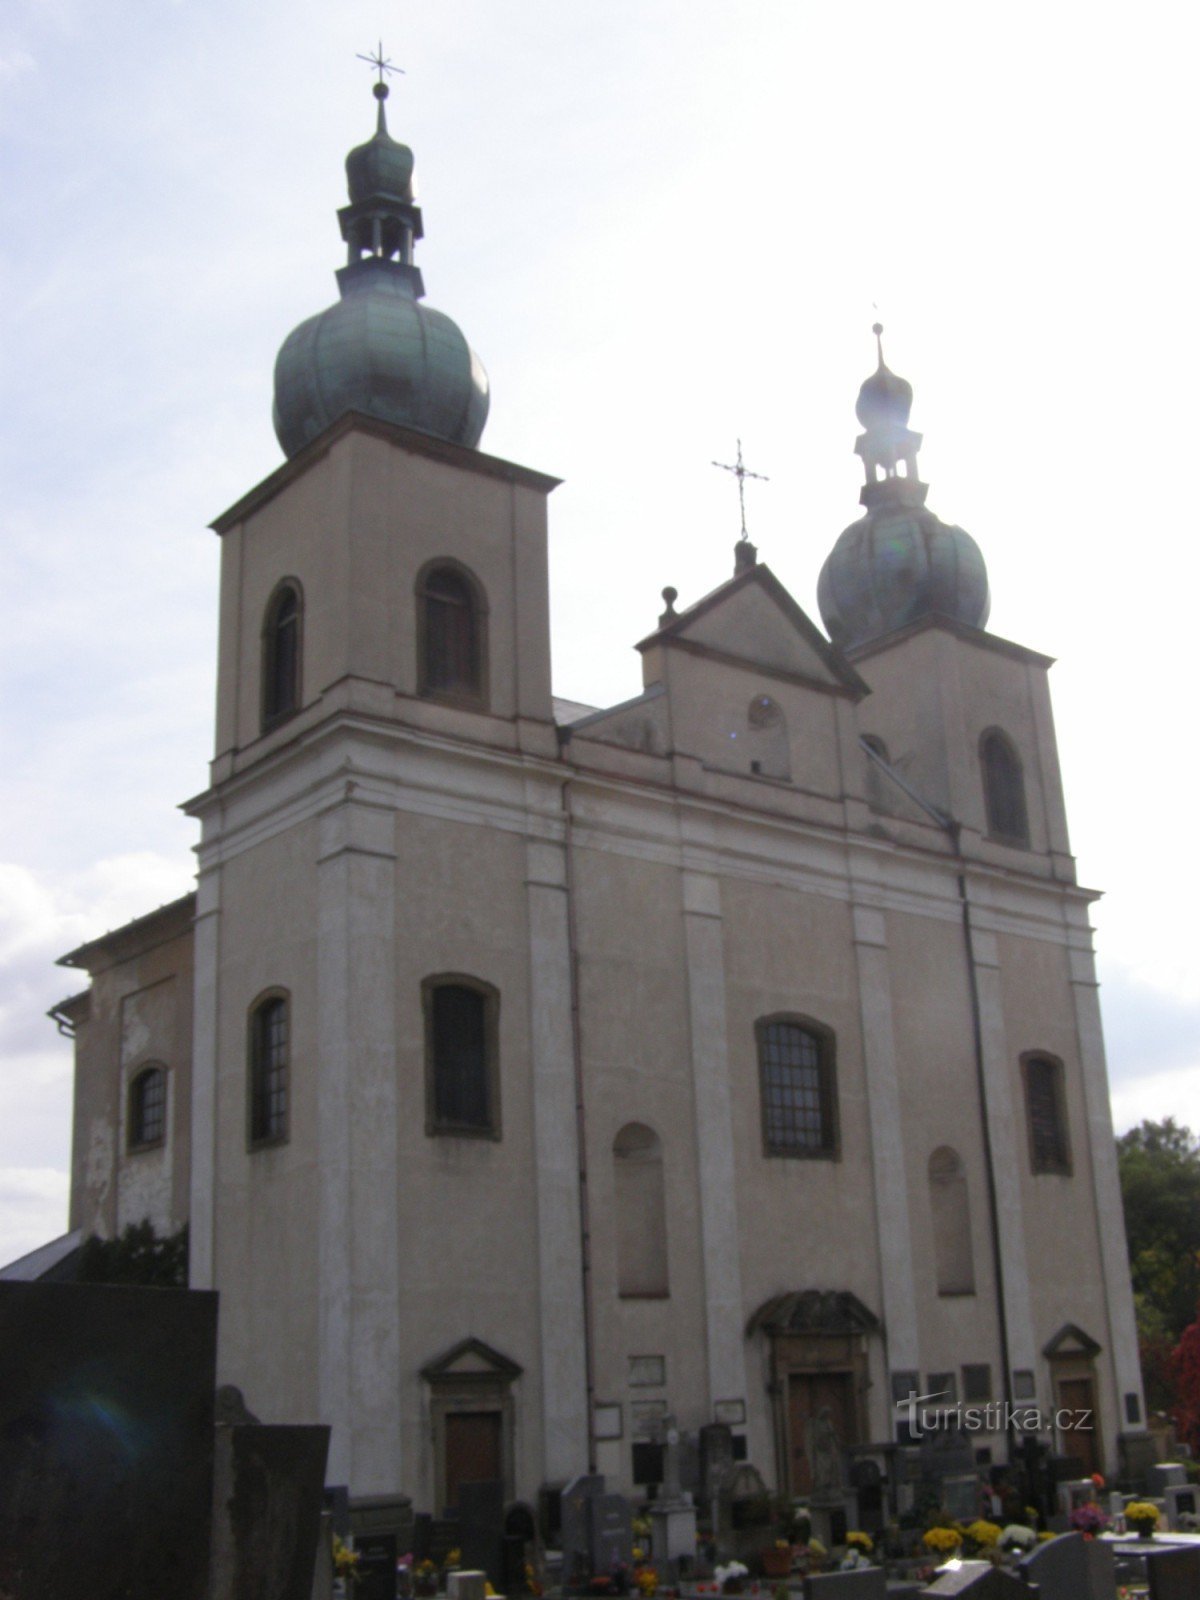 Kostelec nad Orlicí - iglesia de St. Ana